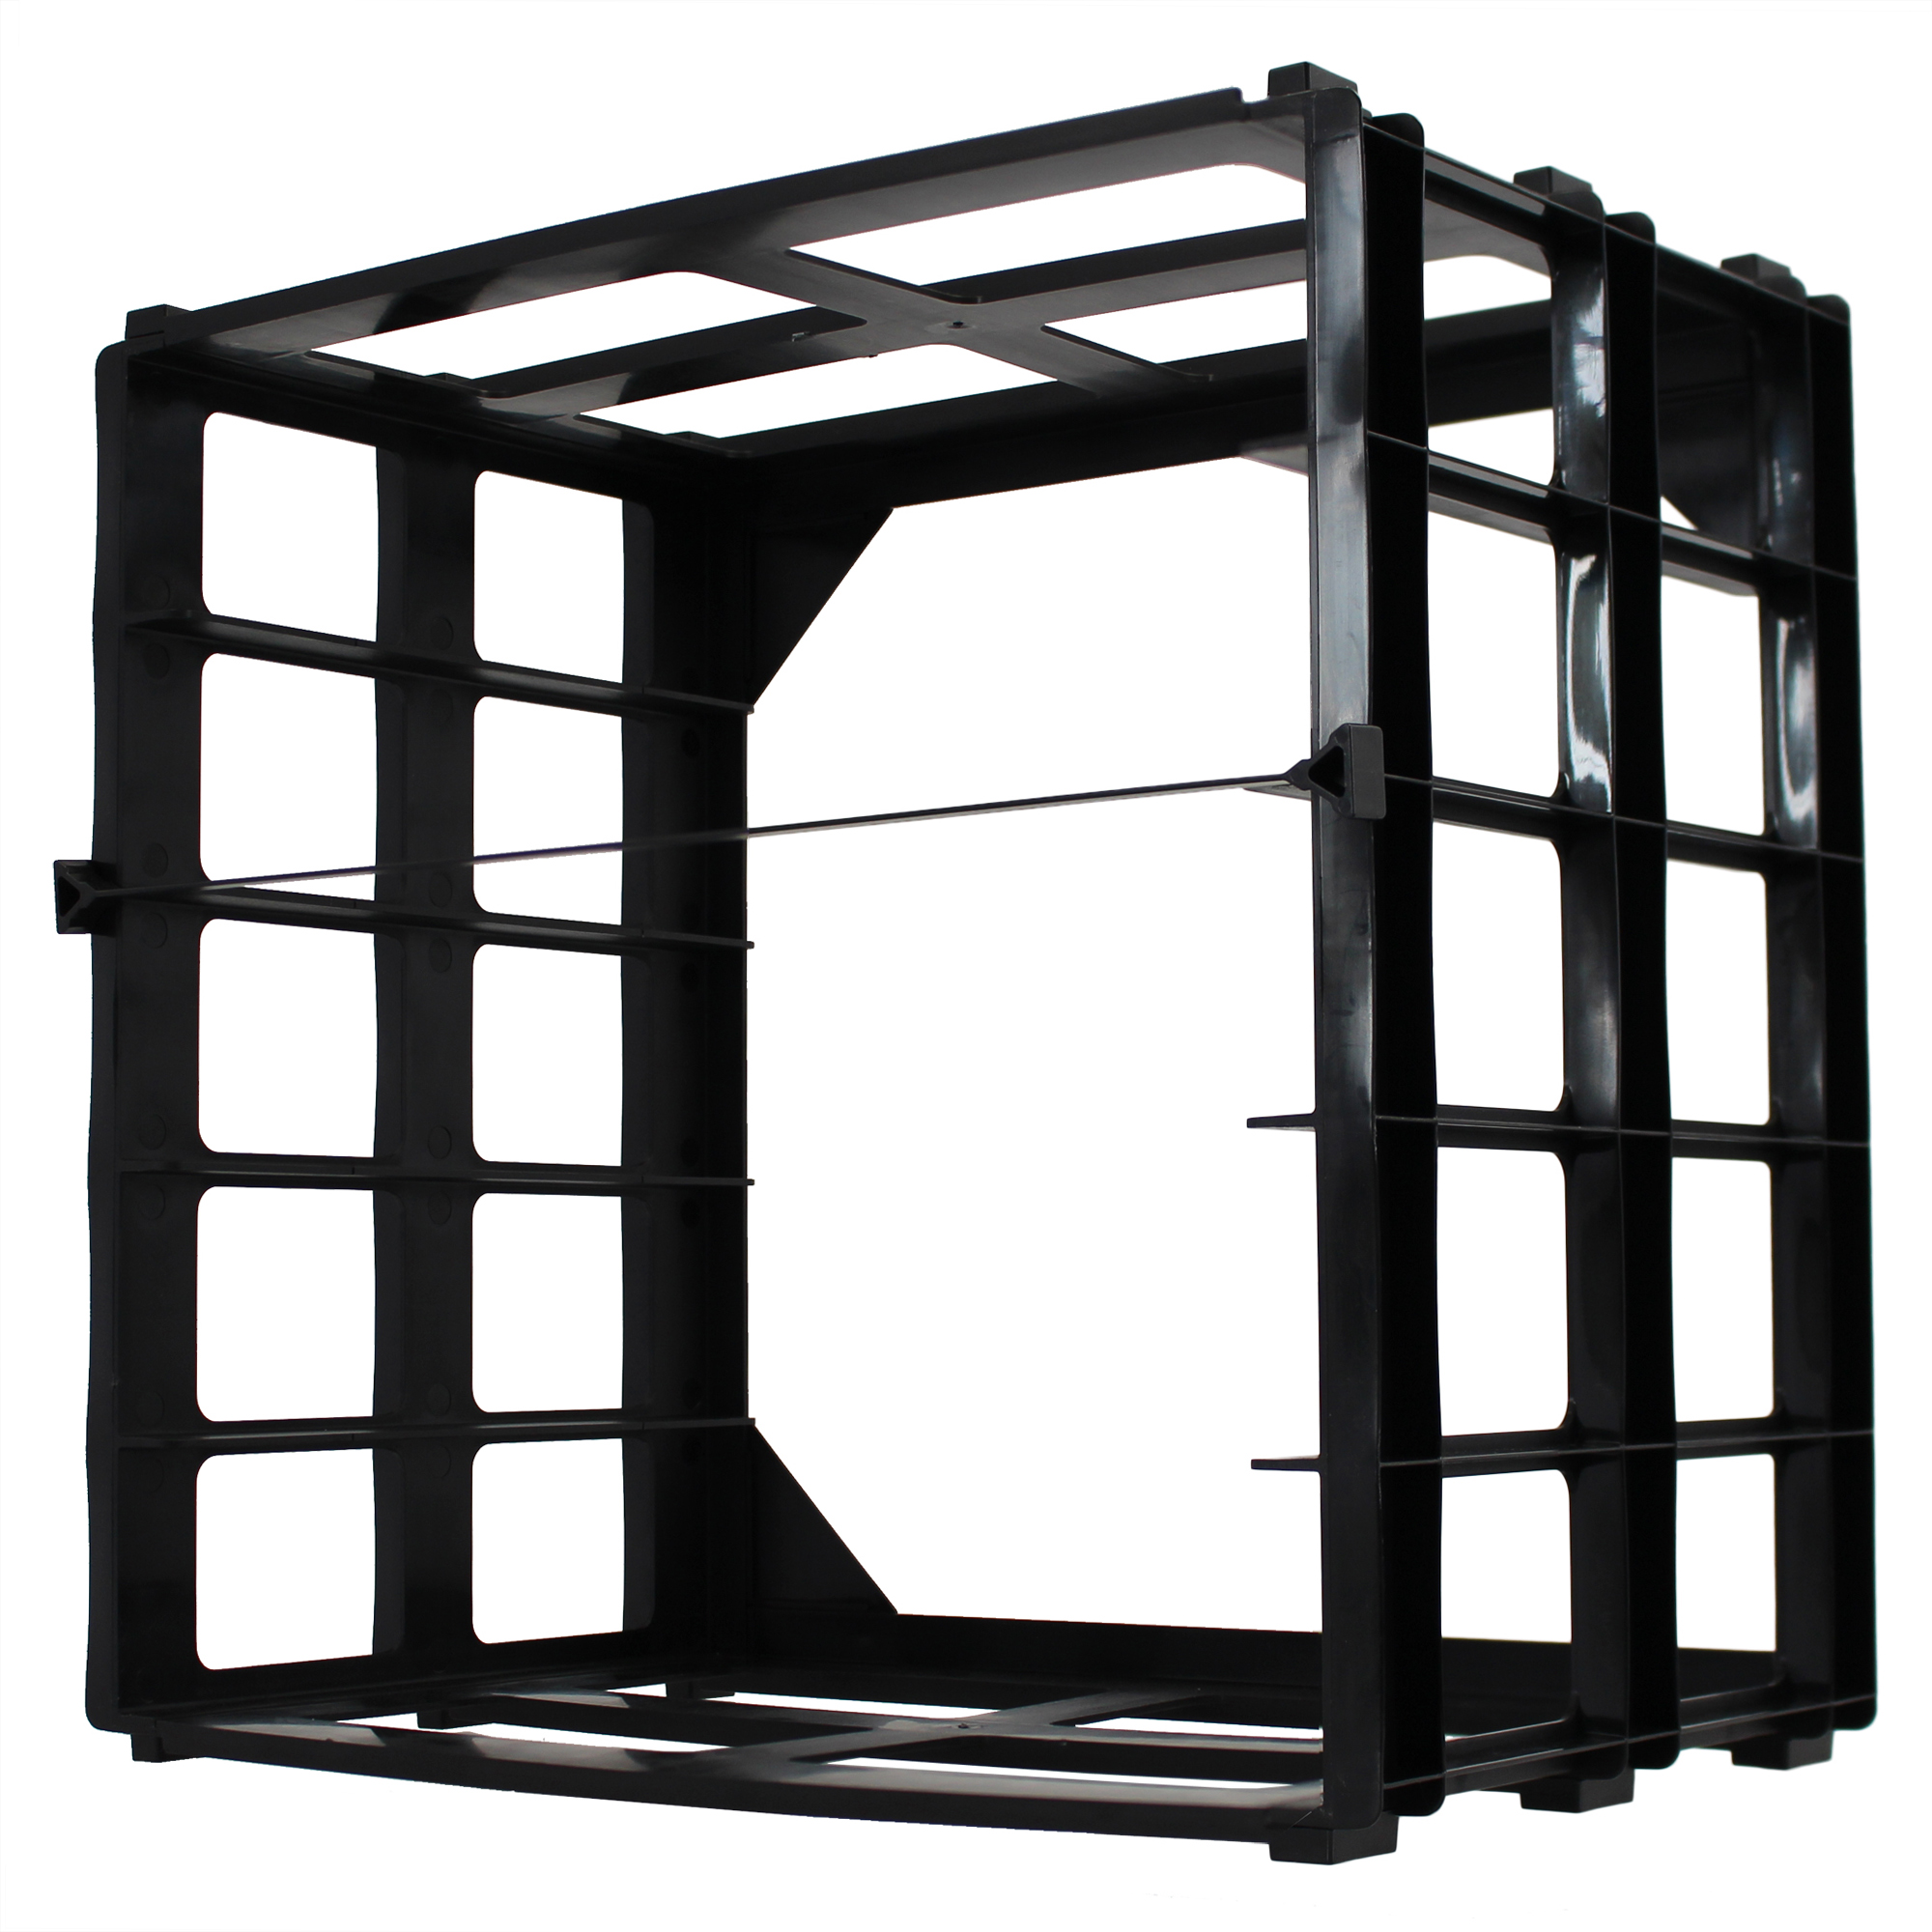 A4 Box Stak Frame & Handles - Trade